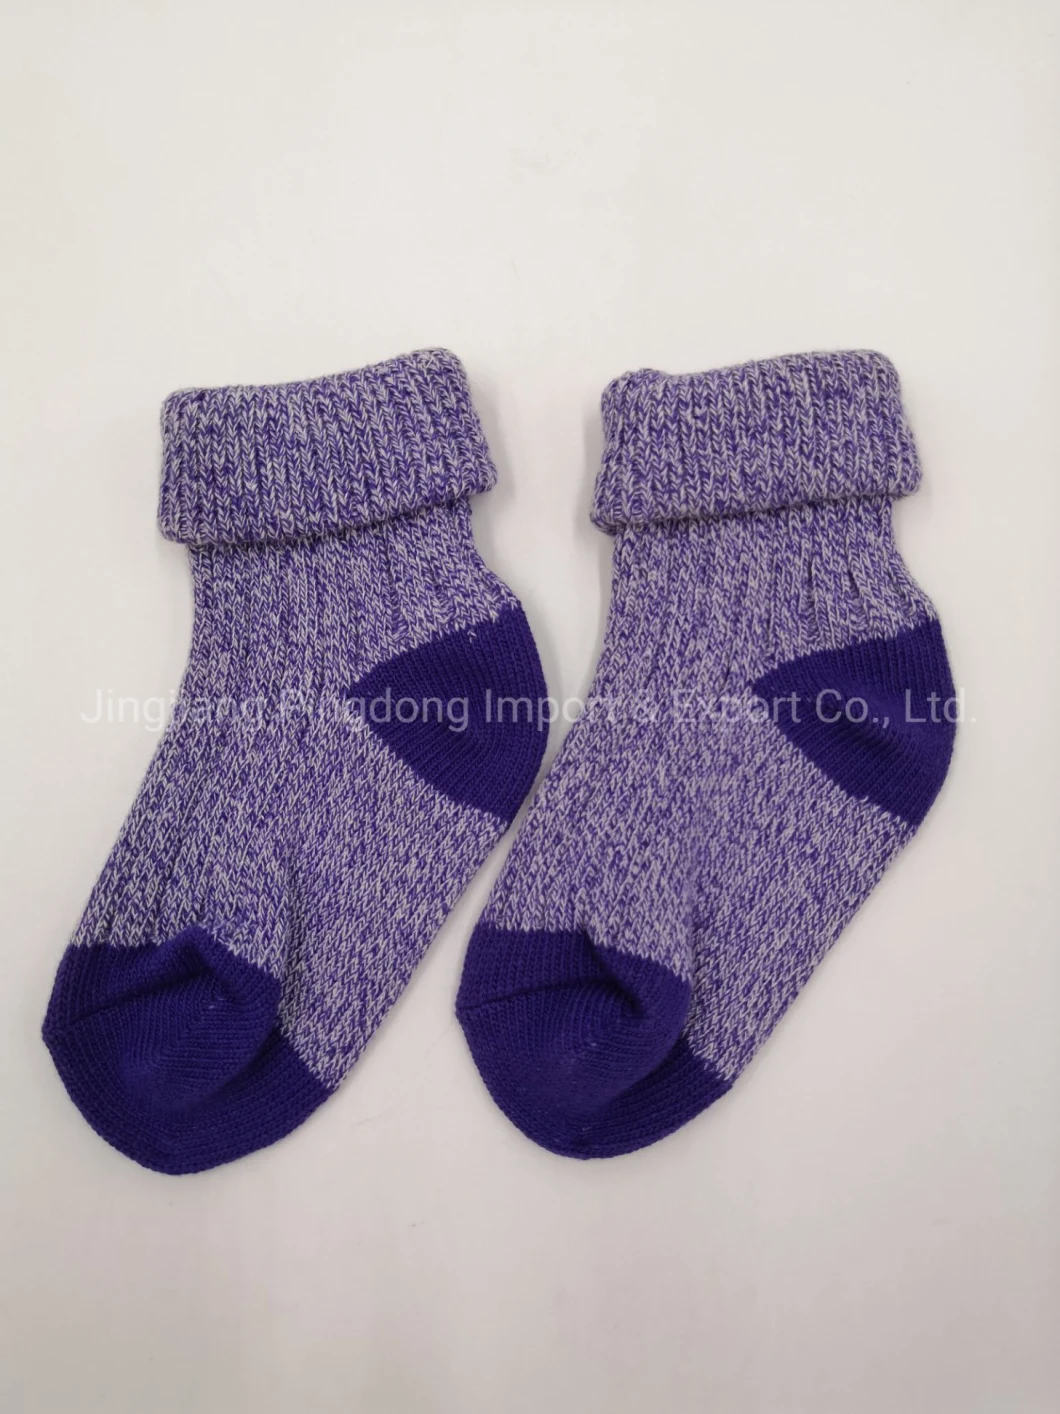 Wholesale Children Cotton Socks Ankle Socks Fashion Socks Sport Socks